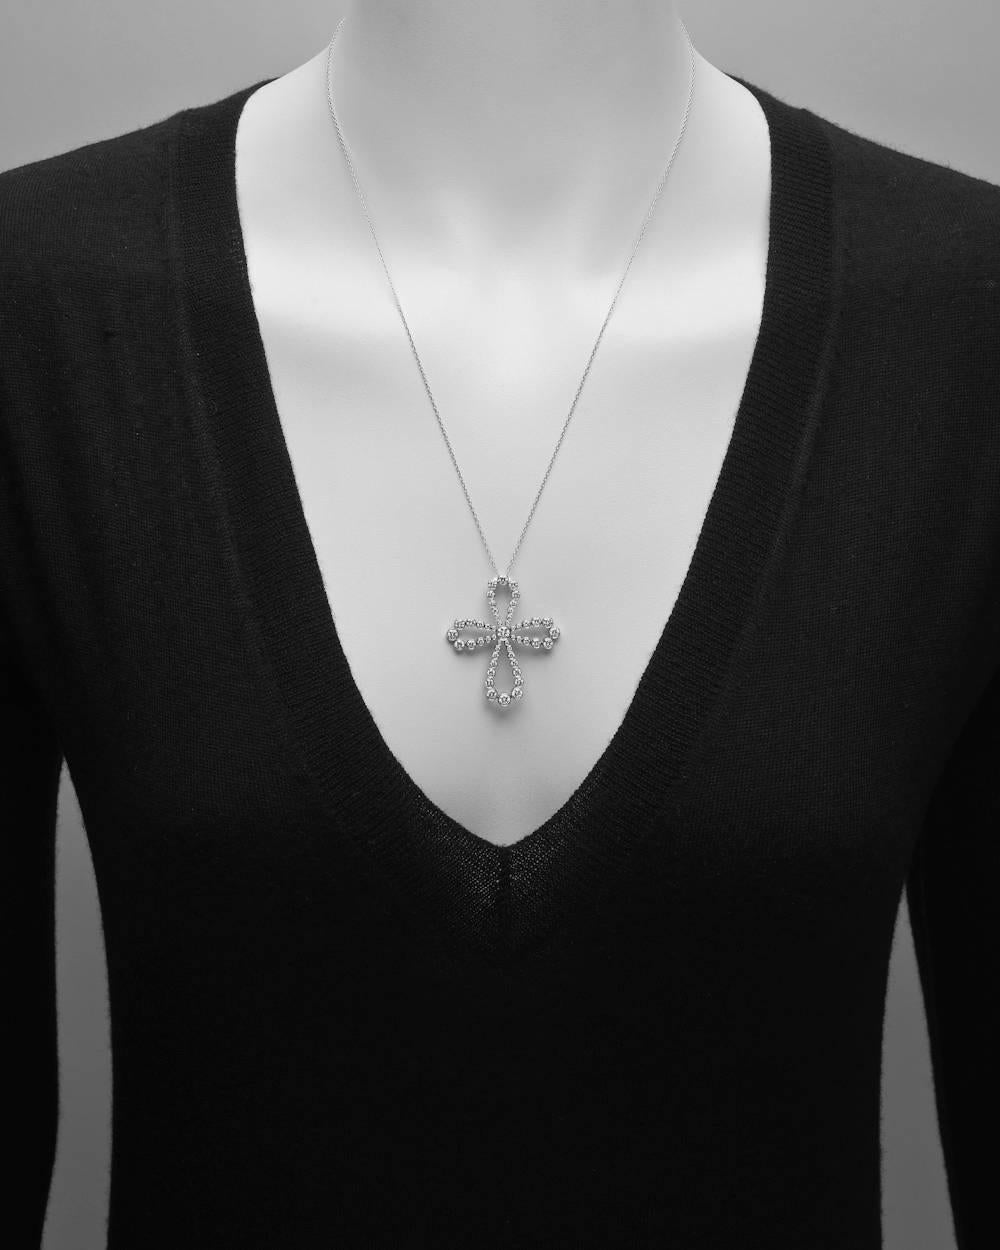 Diamond cross pendant necklace, bezel-set with circular-cut diamonds of graduated size, mounted in platinum, on a 21